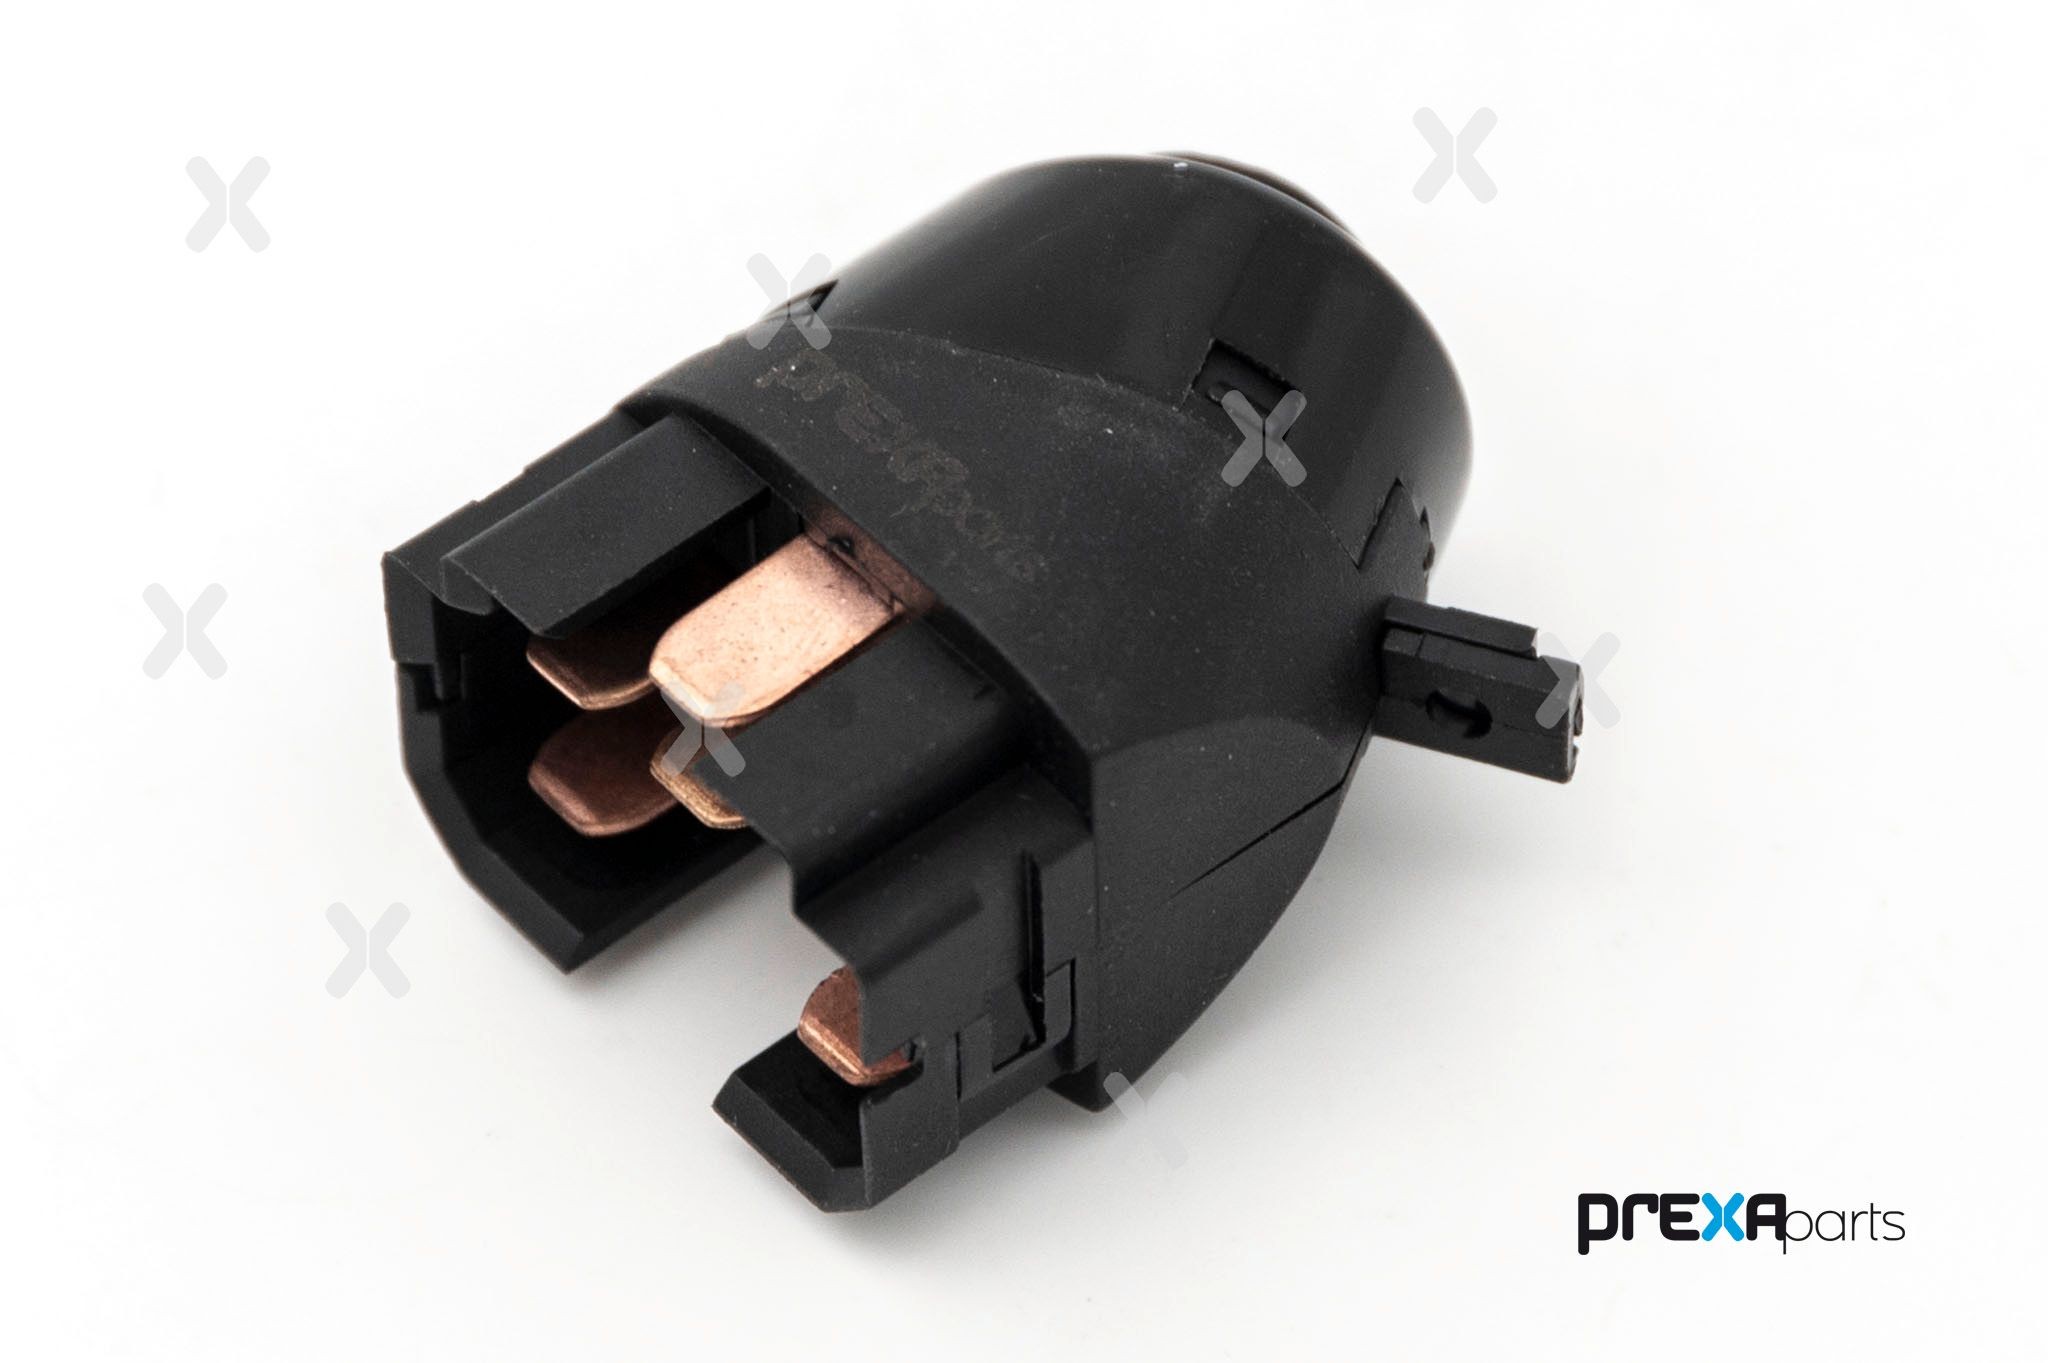 PREXAparts P112013 Ignition switch 357 905 865